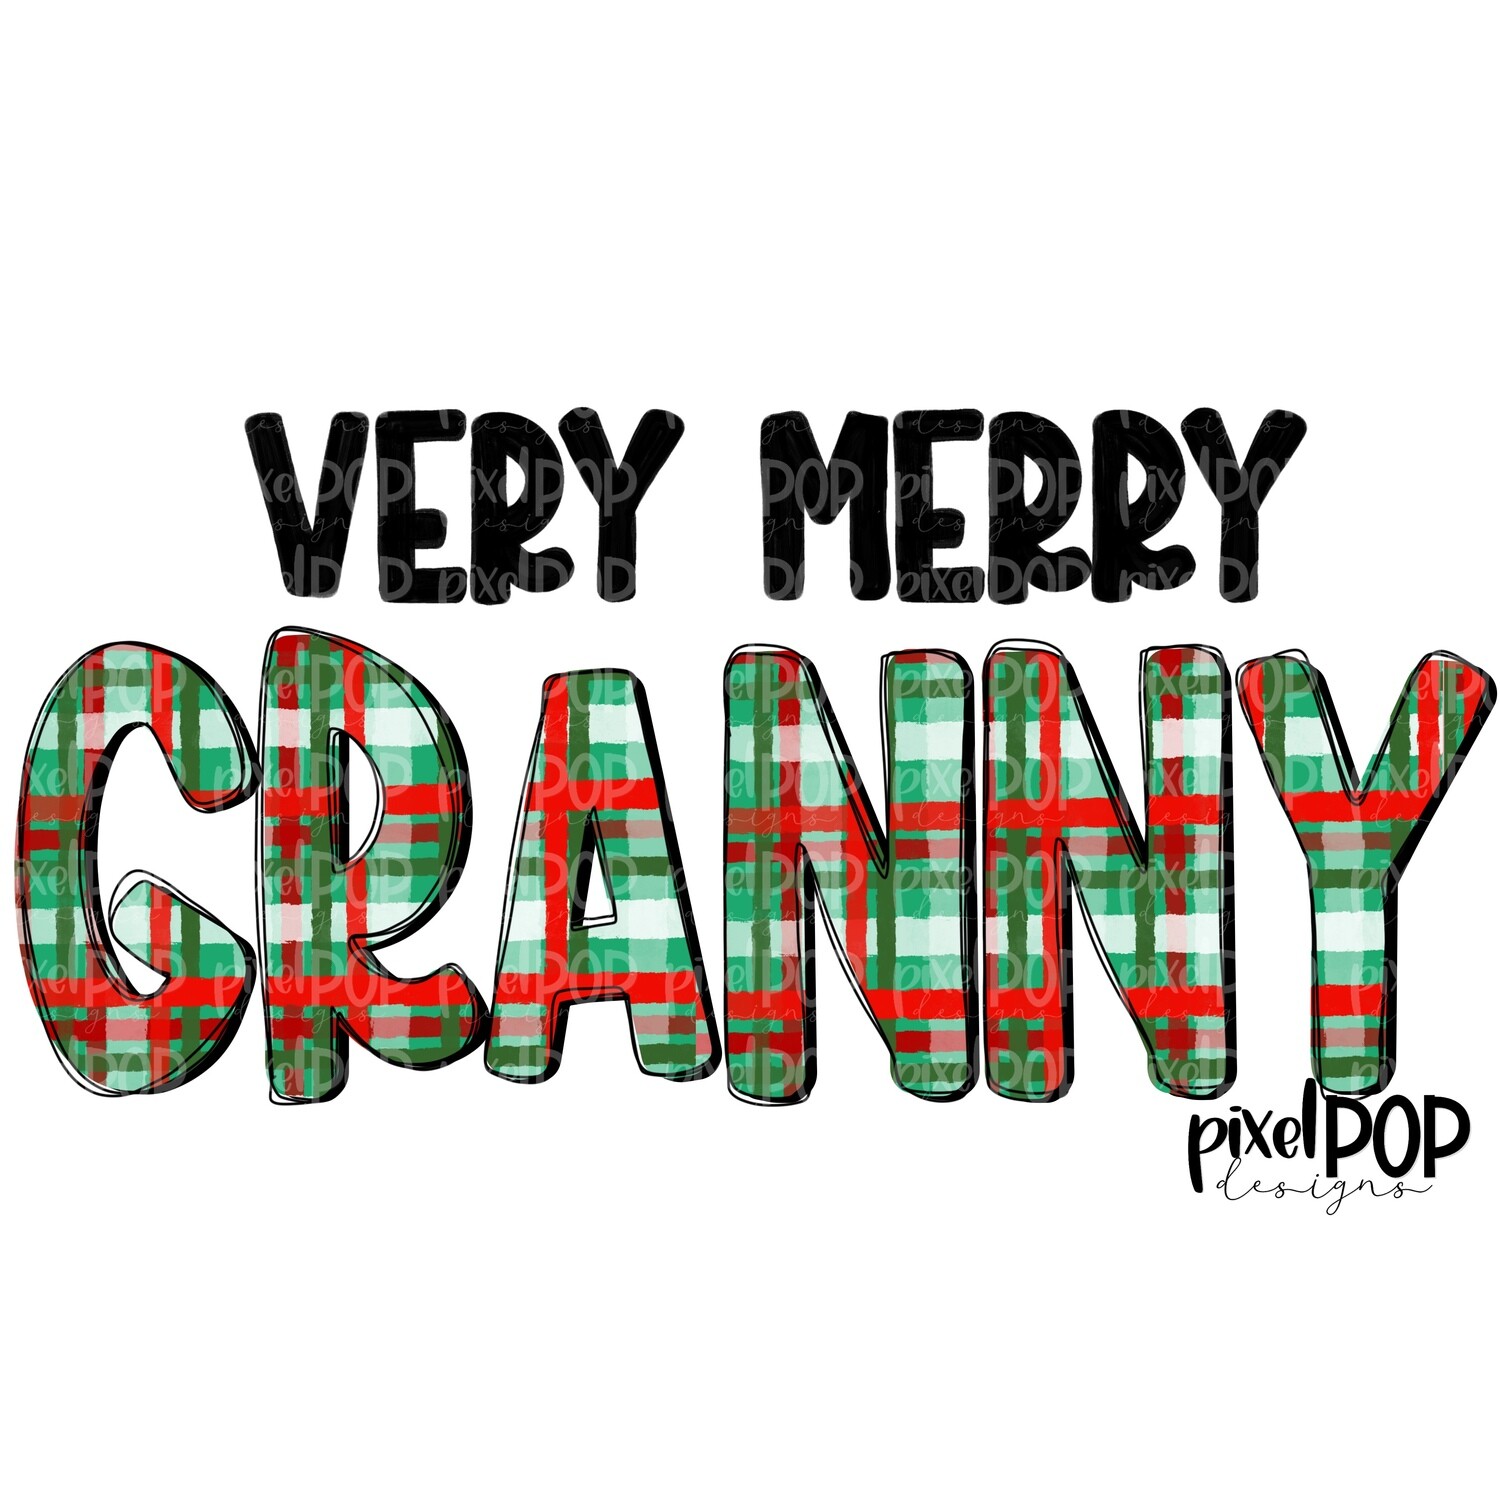 Very Merry Granny Christmas PLAID PNG | Christmas Design | Sublimation Art | Digital Download | Printable Artwork | Art